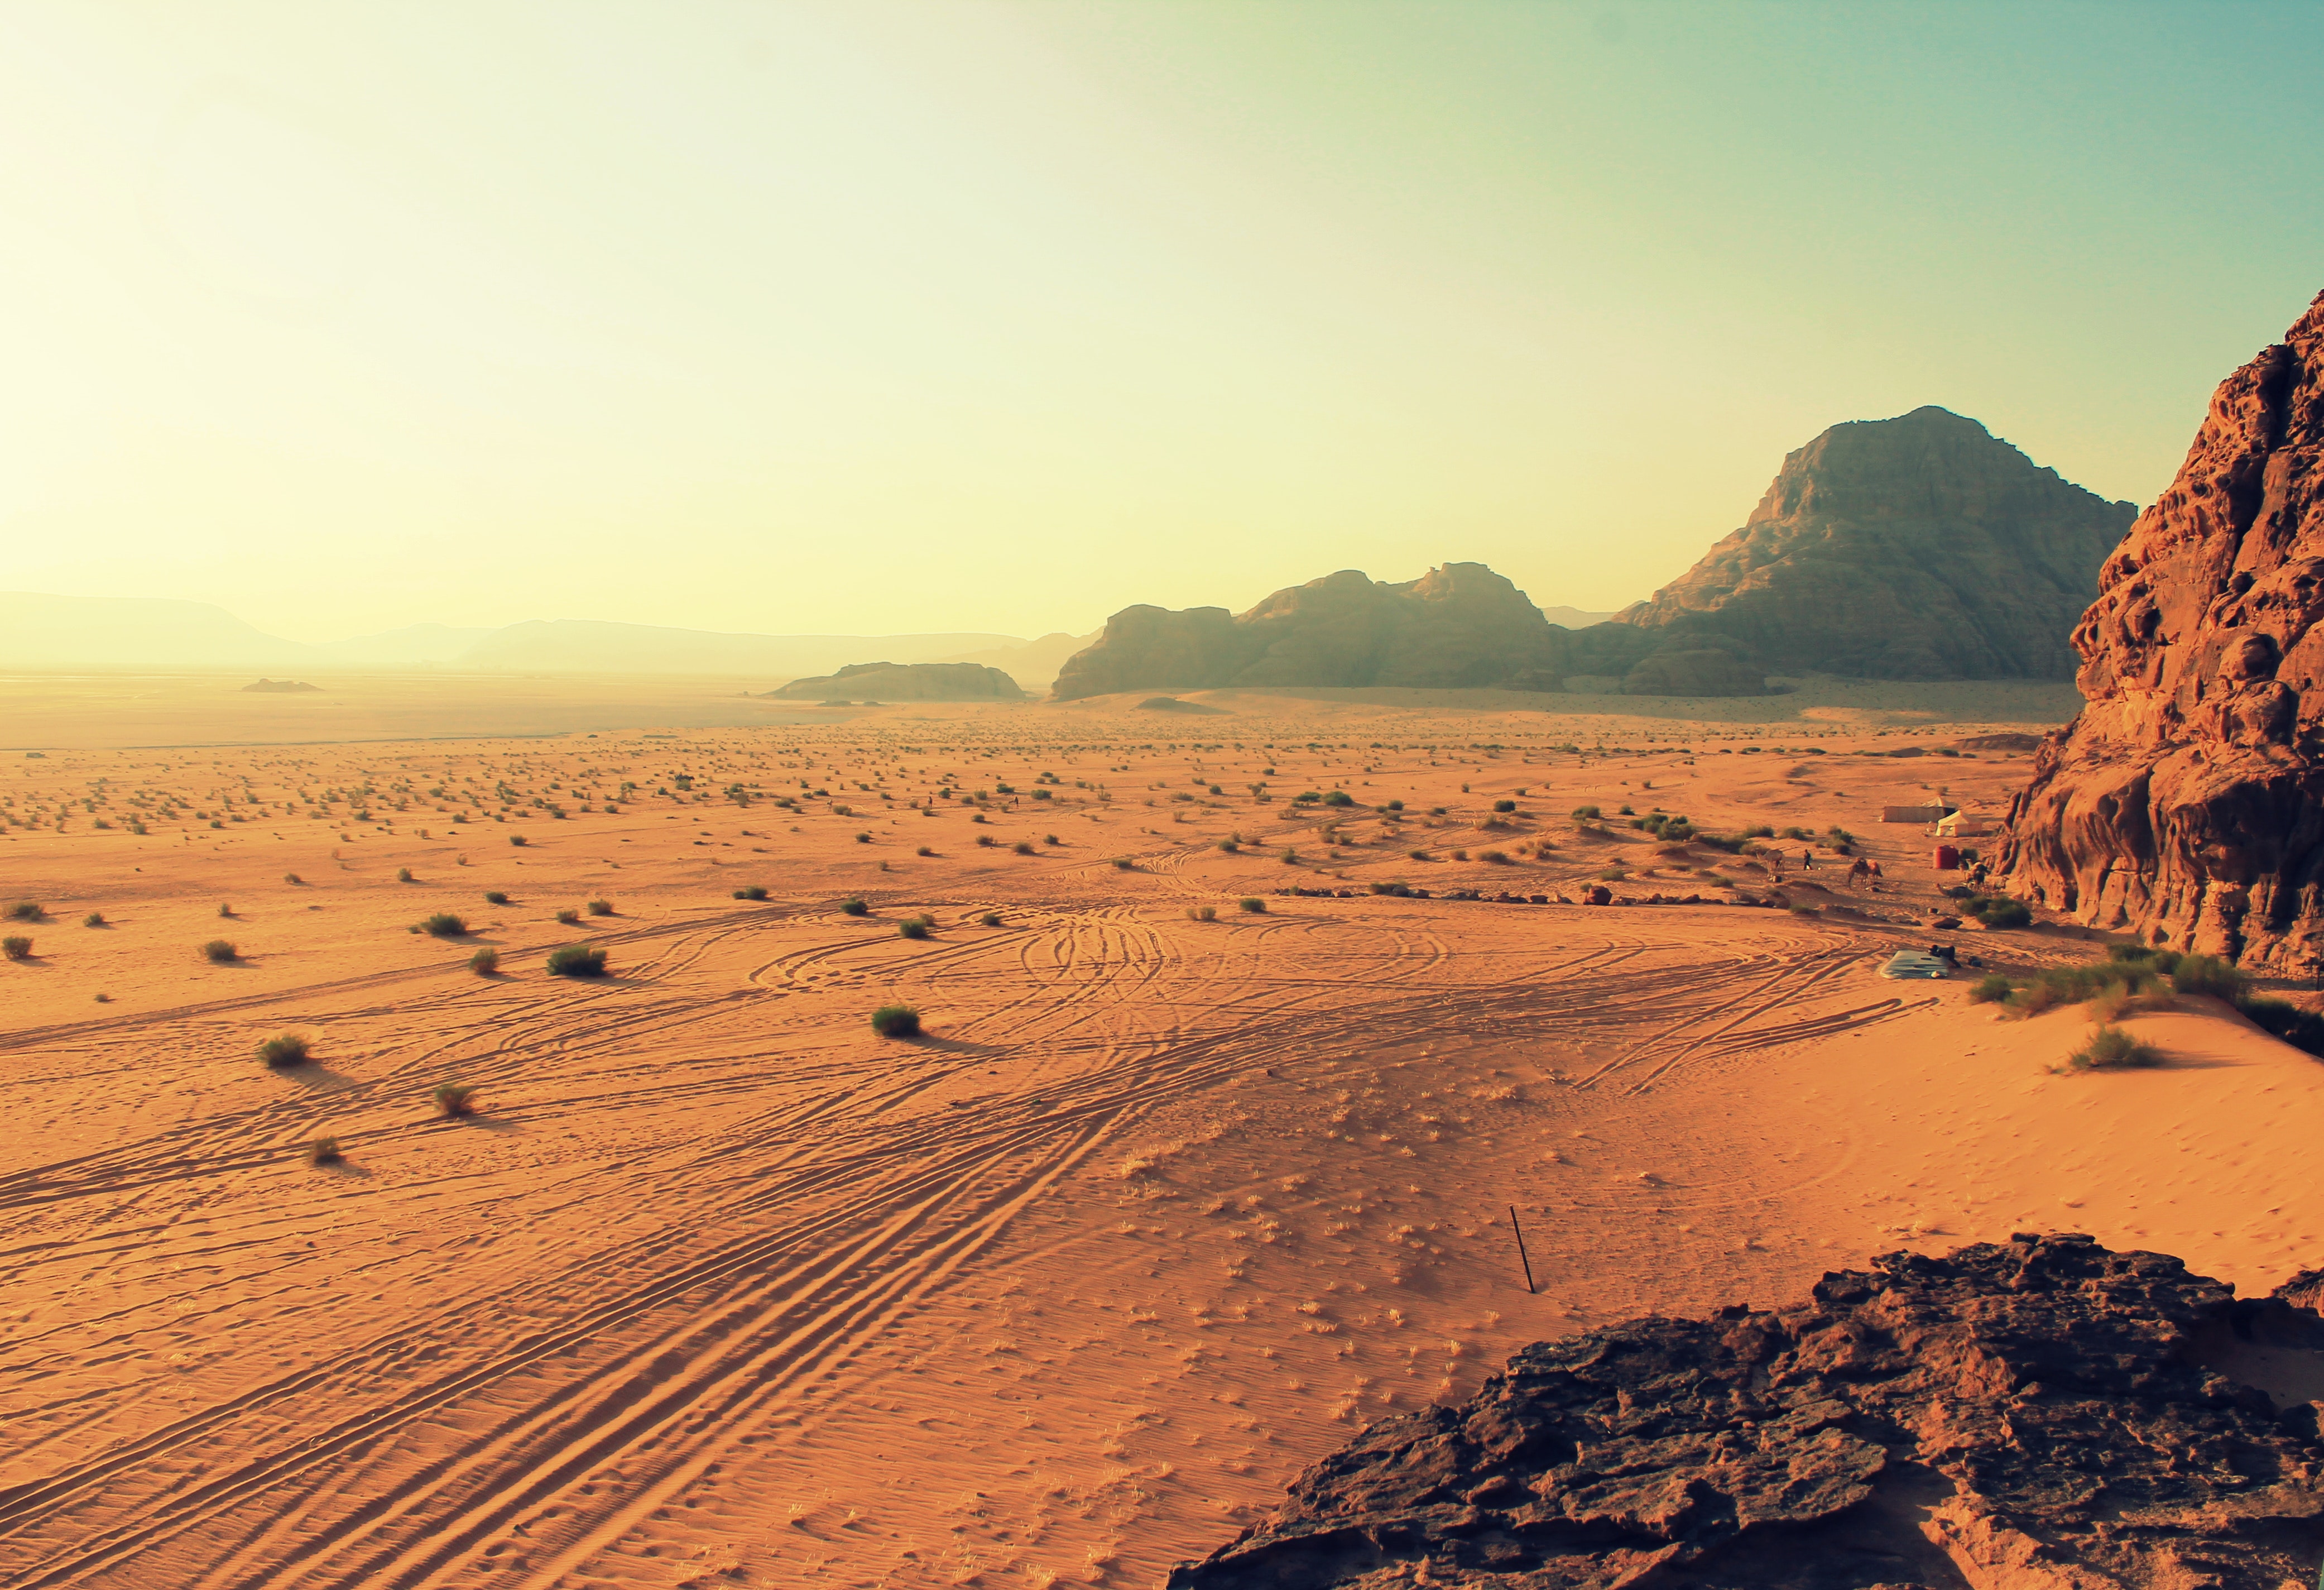 Desert pictures · Pexels · Free Stock Photos